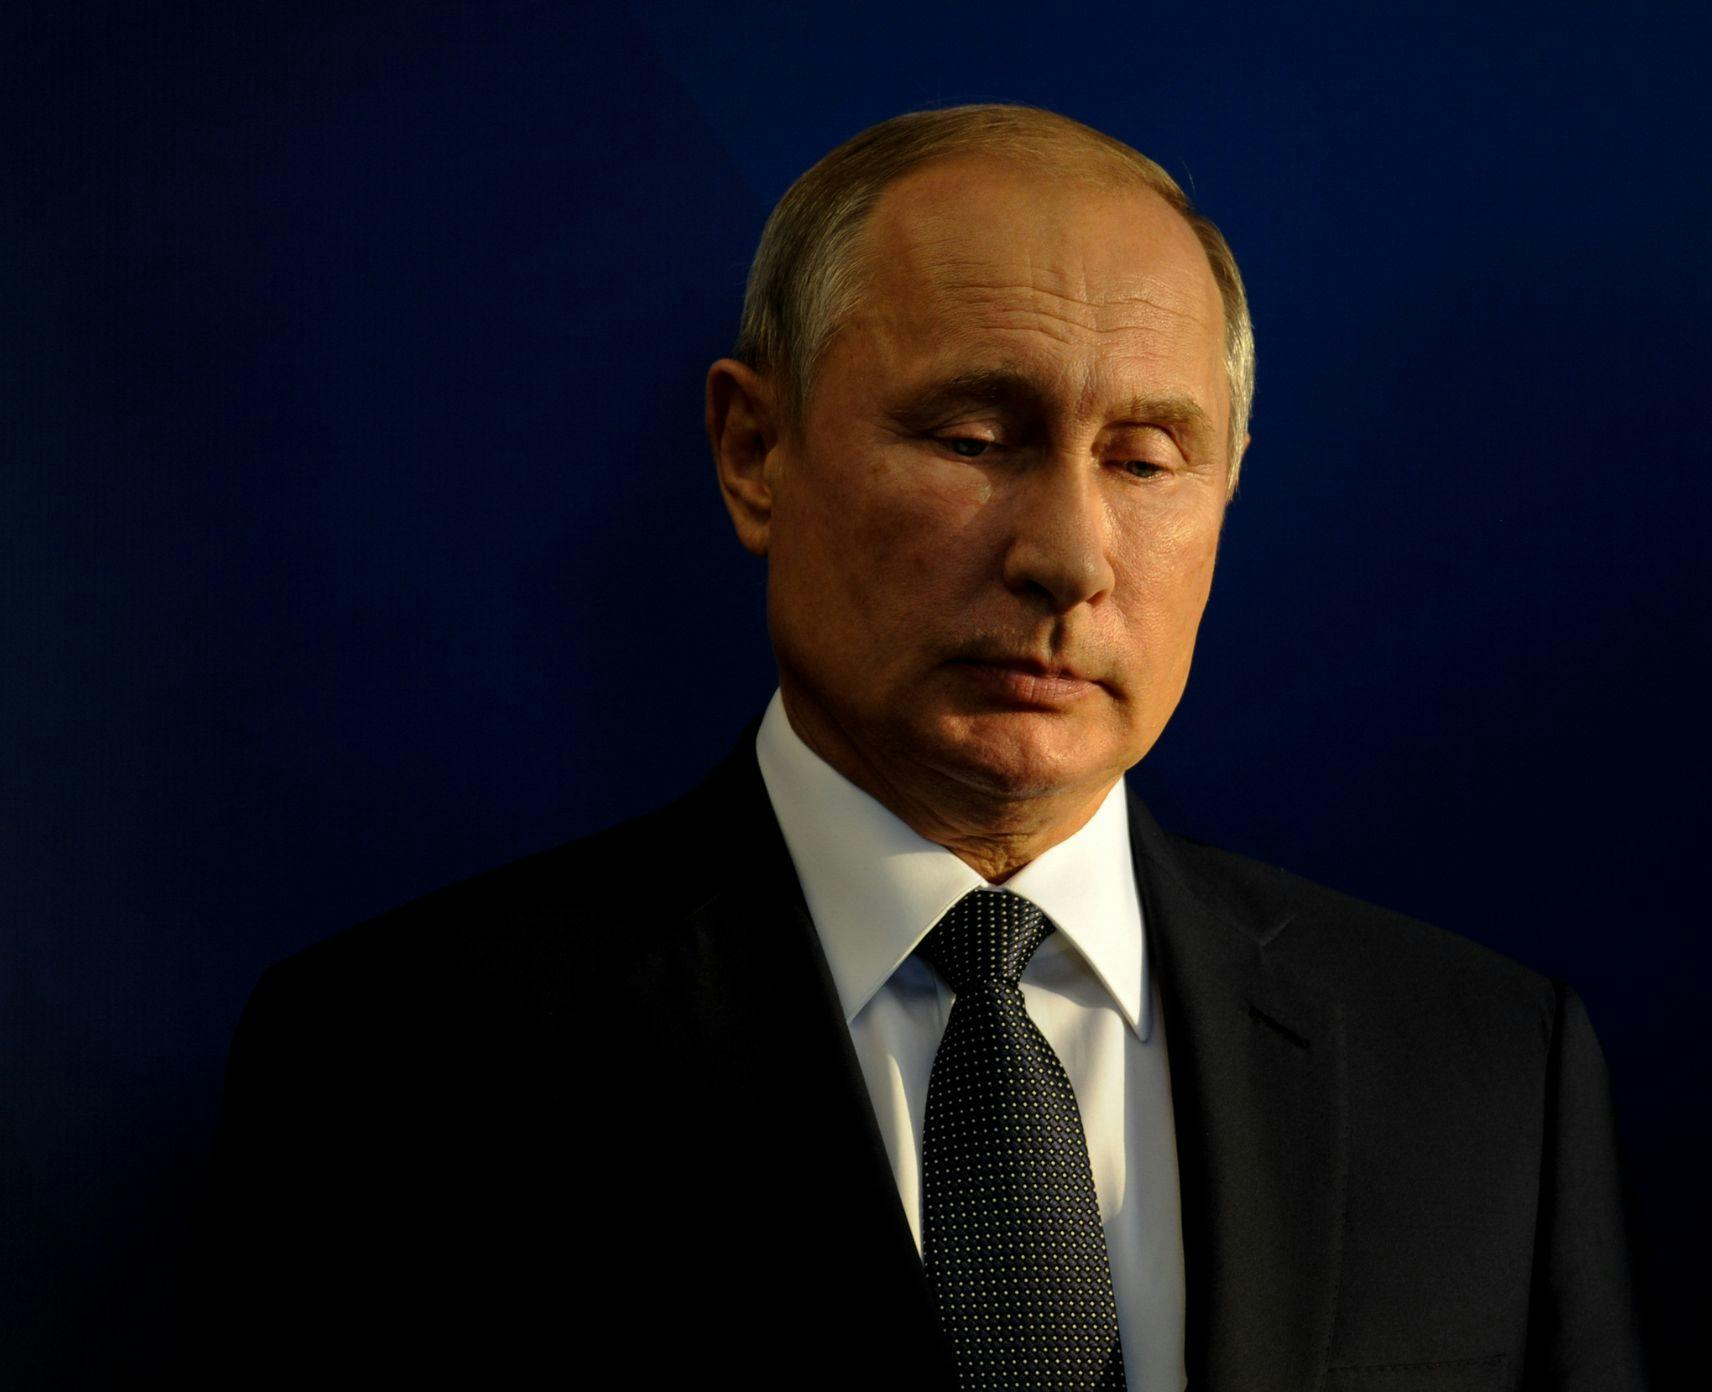 Russian President Vladimir Putin looking downcast